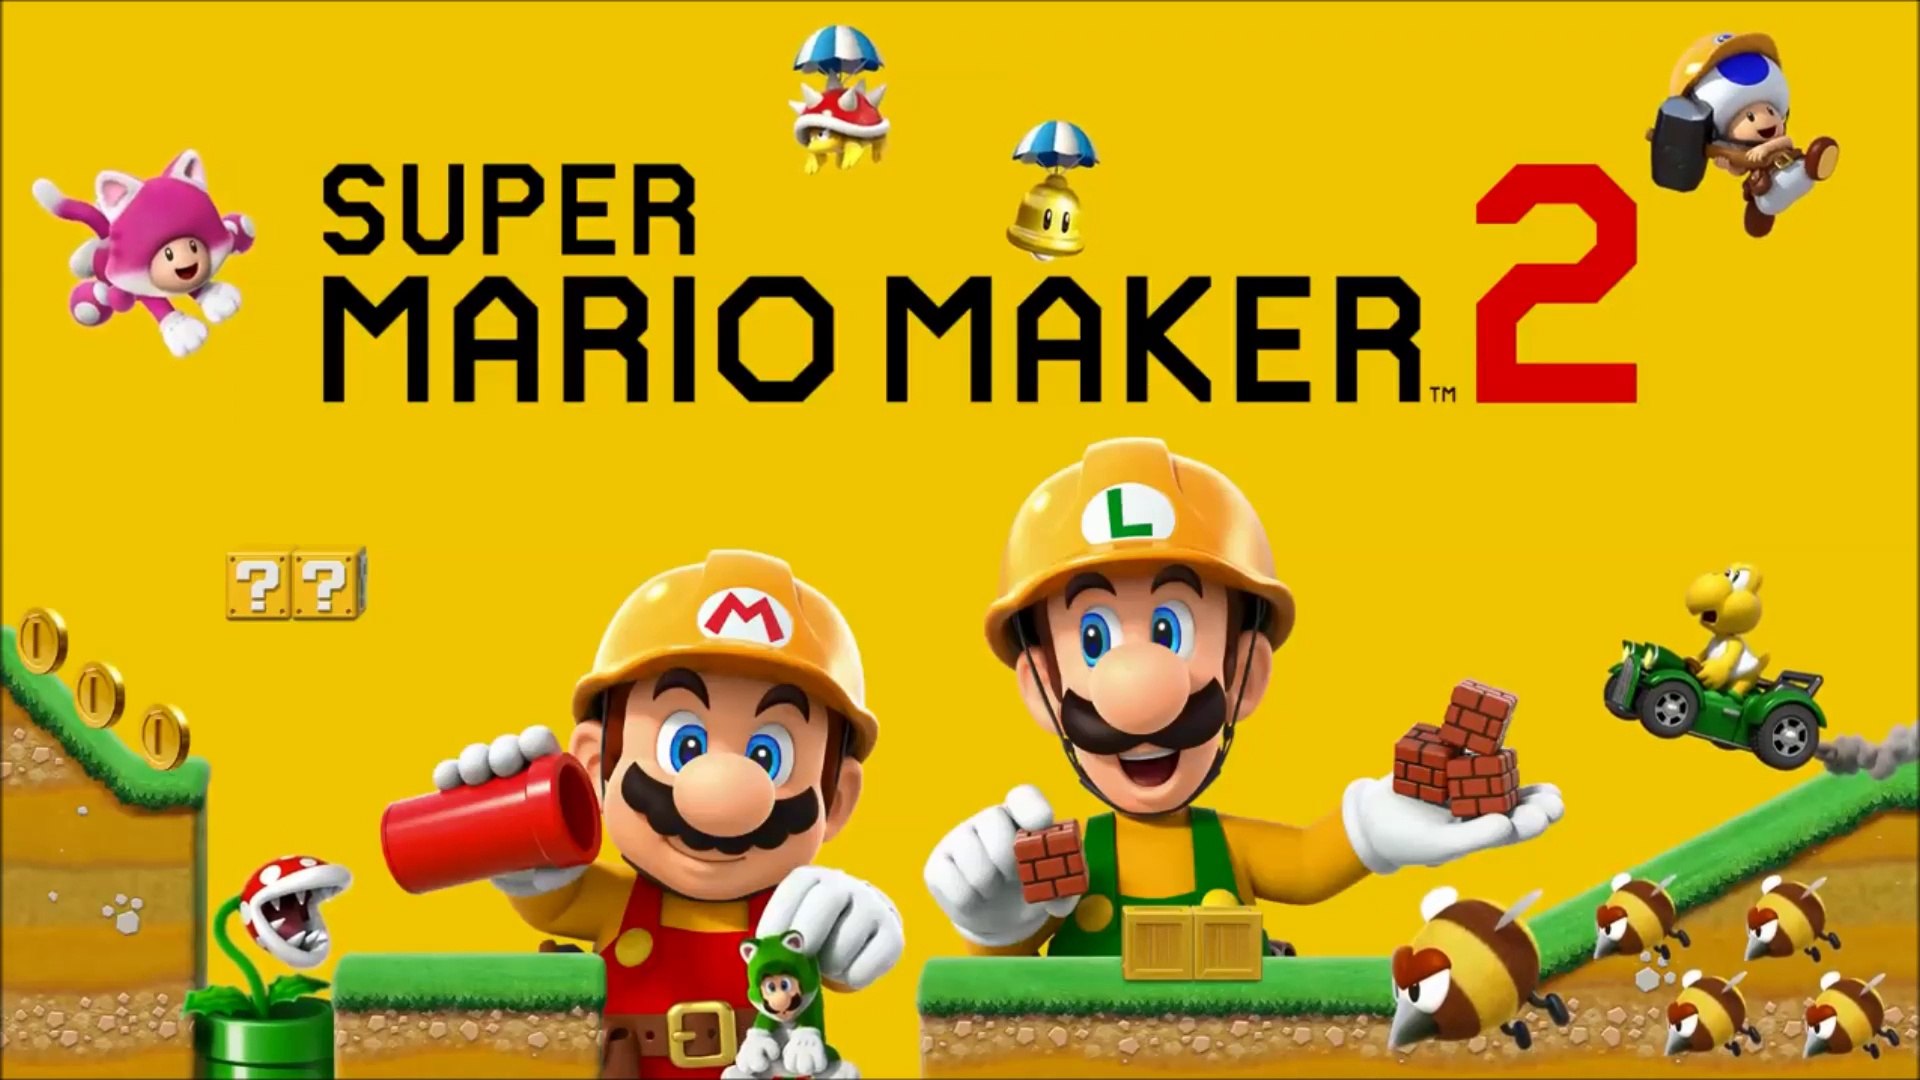 Super Mario Maker 2 スーパーマリオメーカー2 Story Mode Video Dailymotion